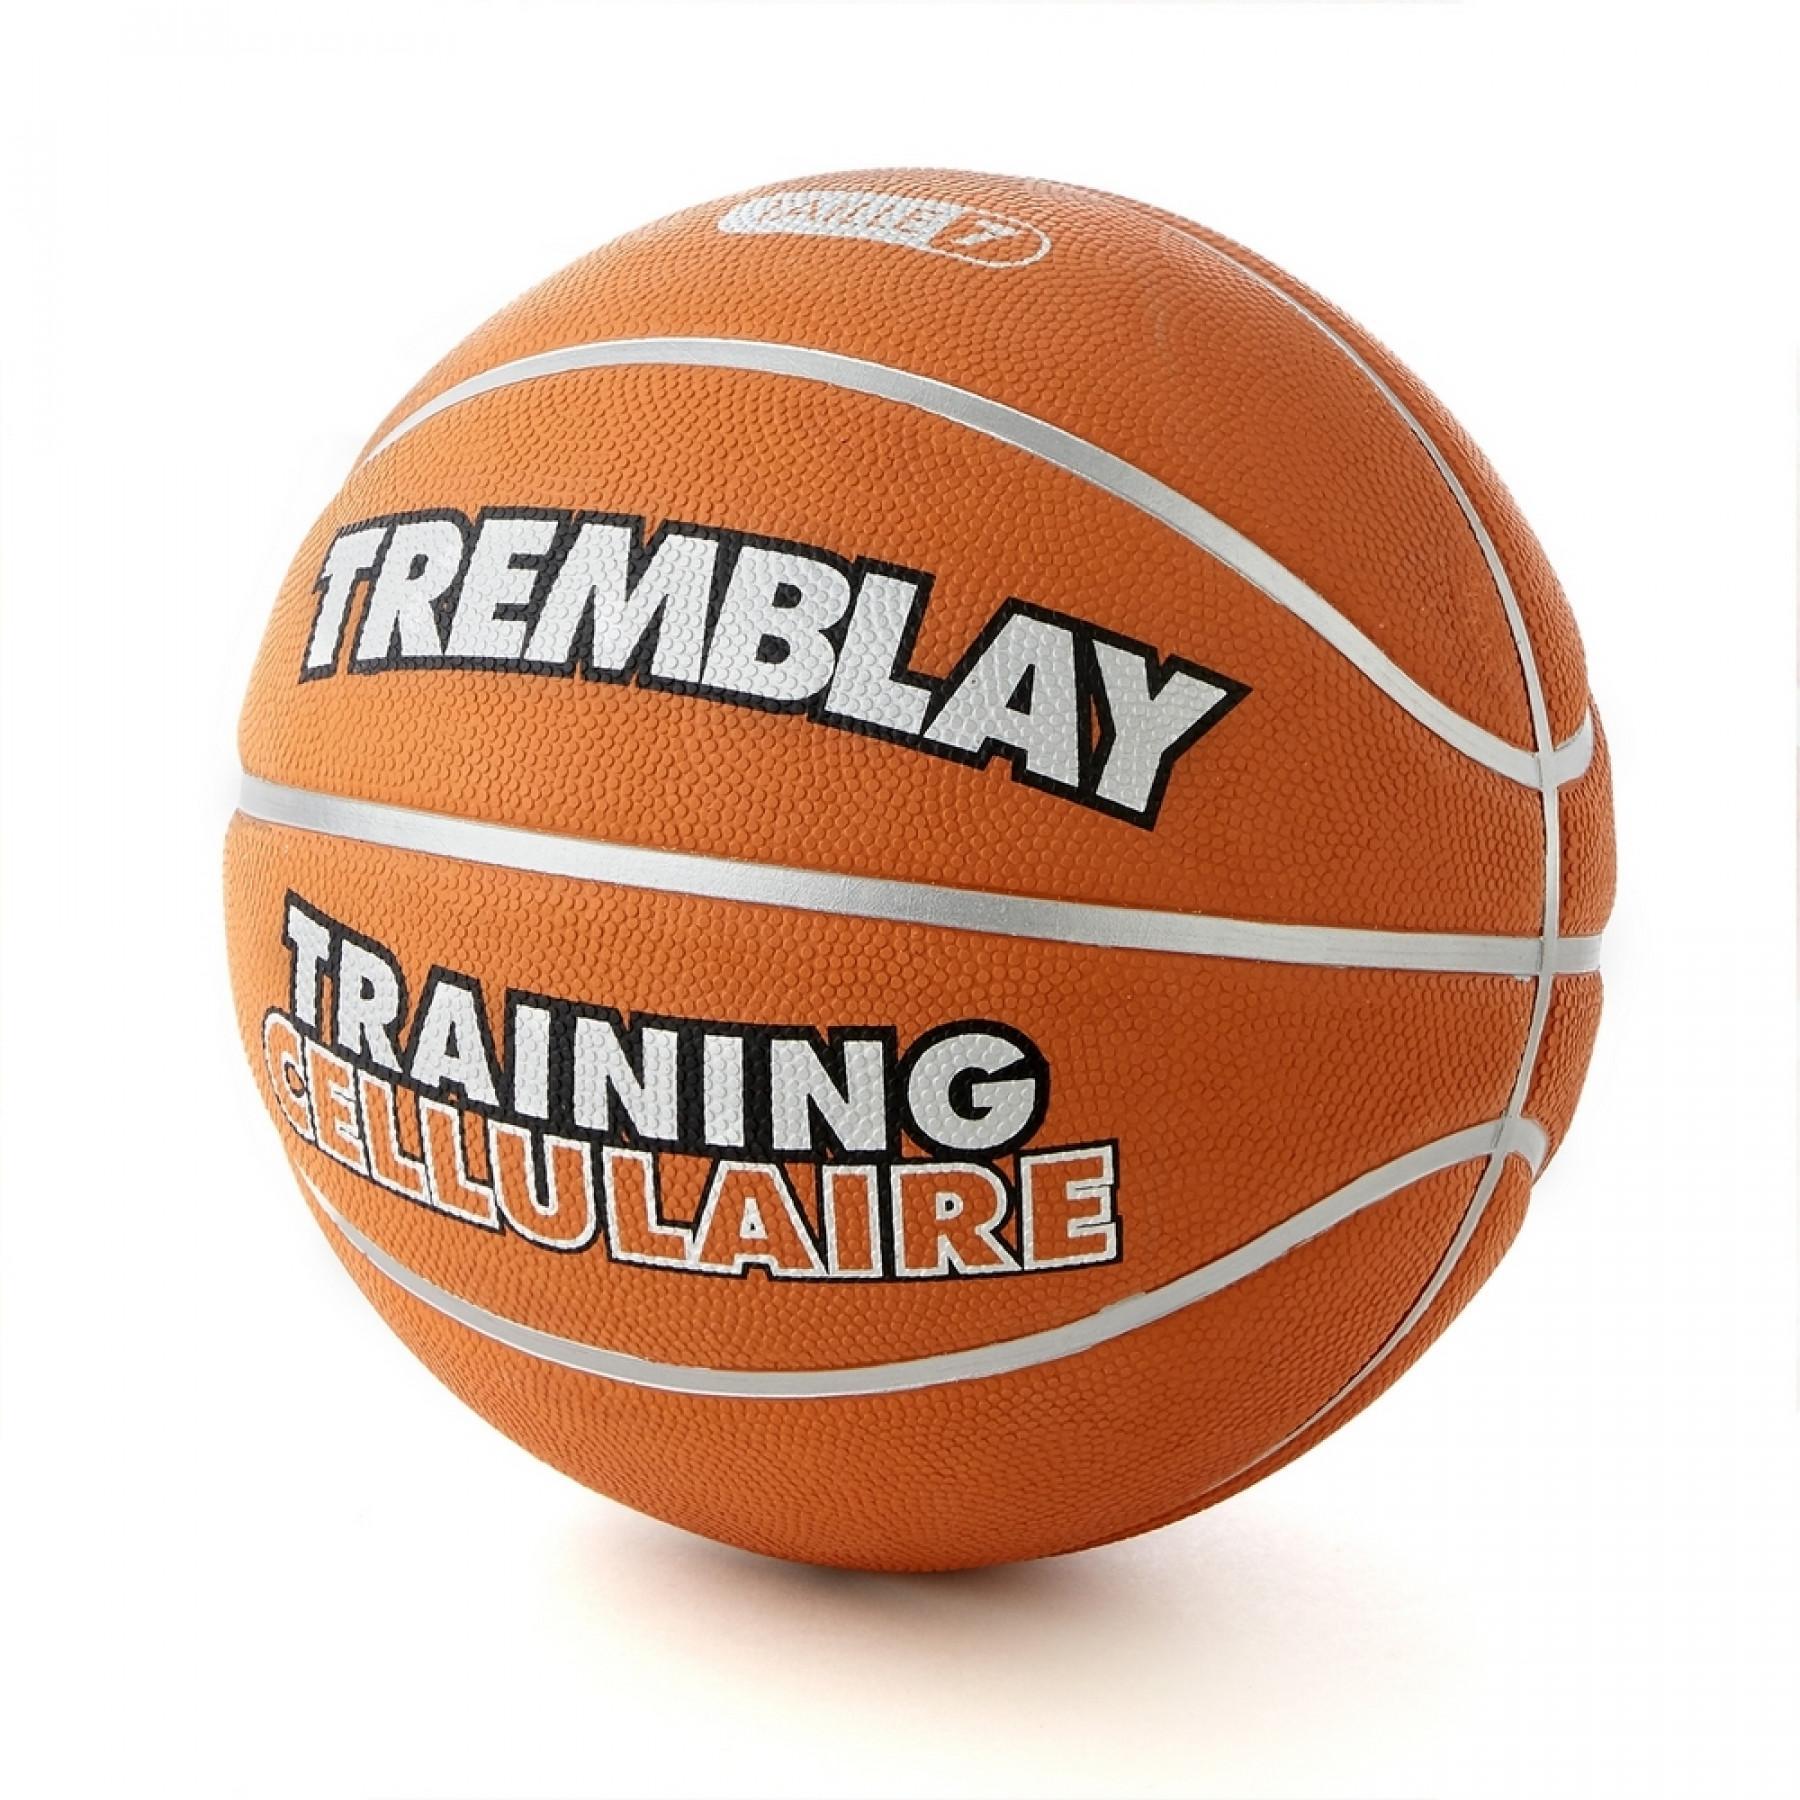 Tremblay cellular training ball